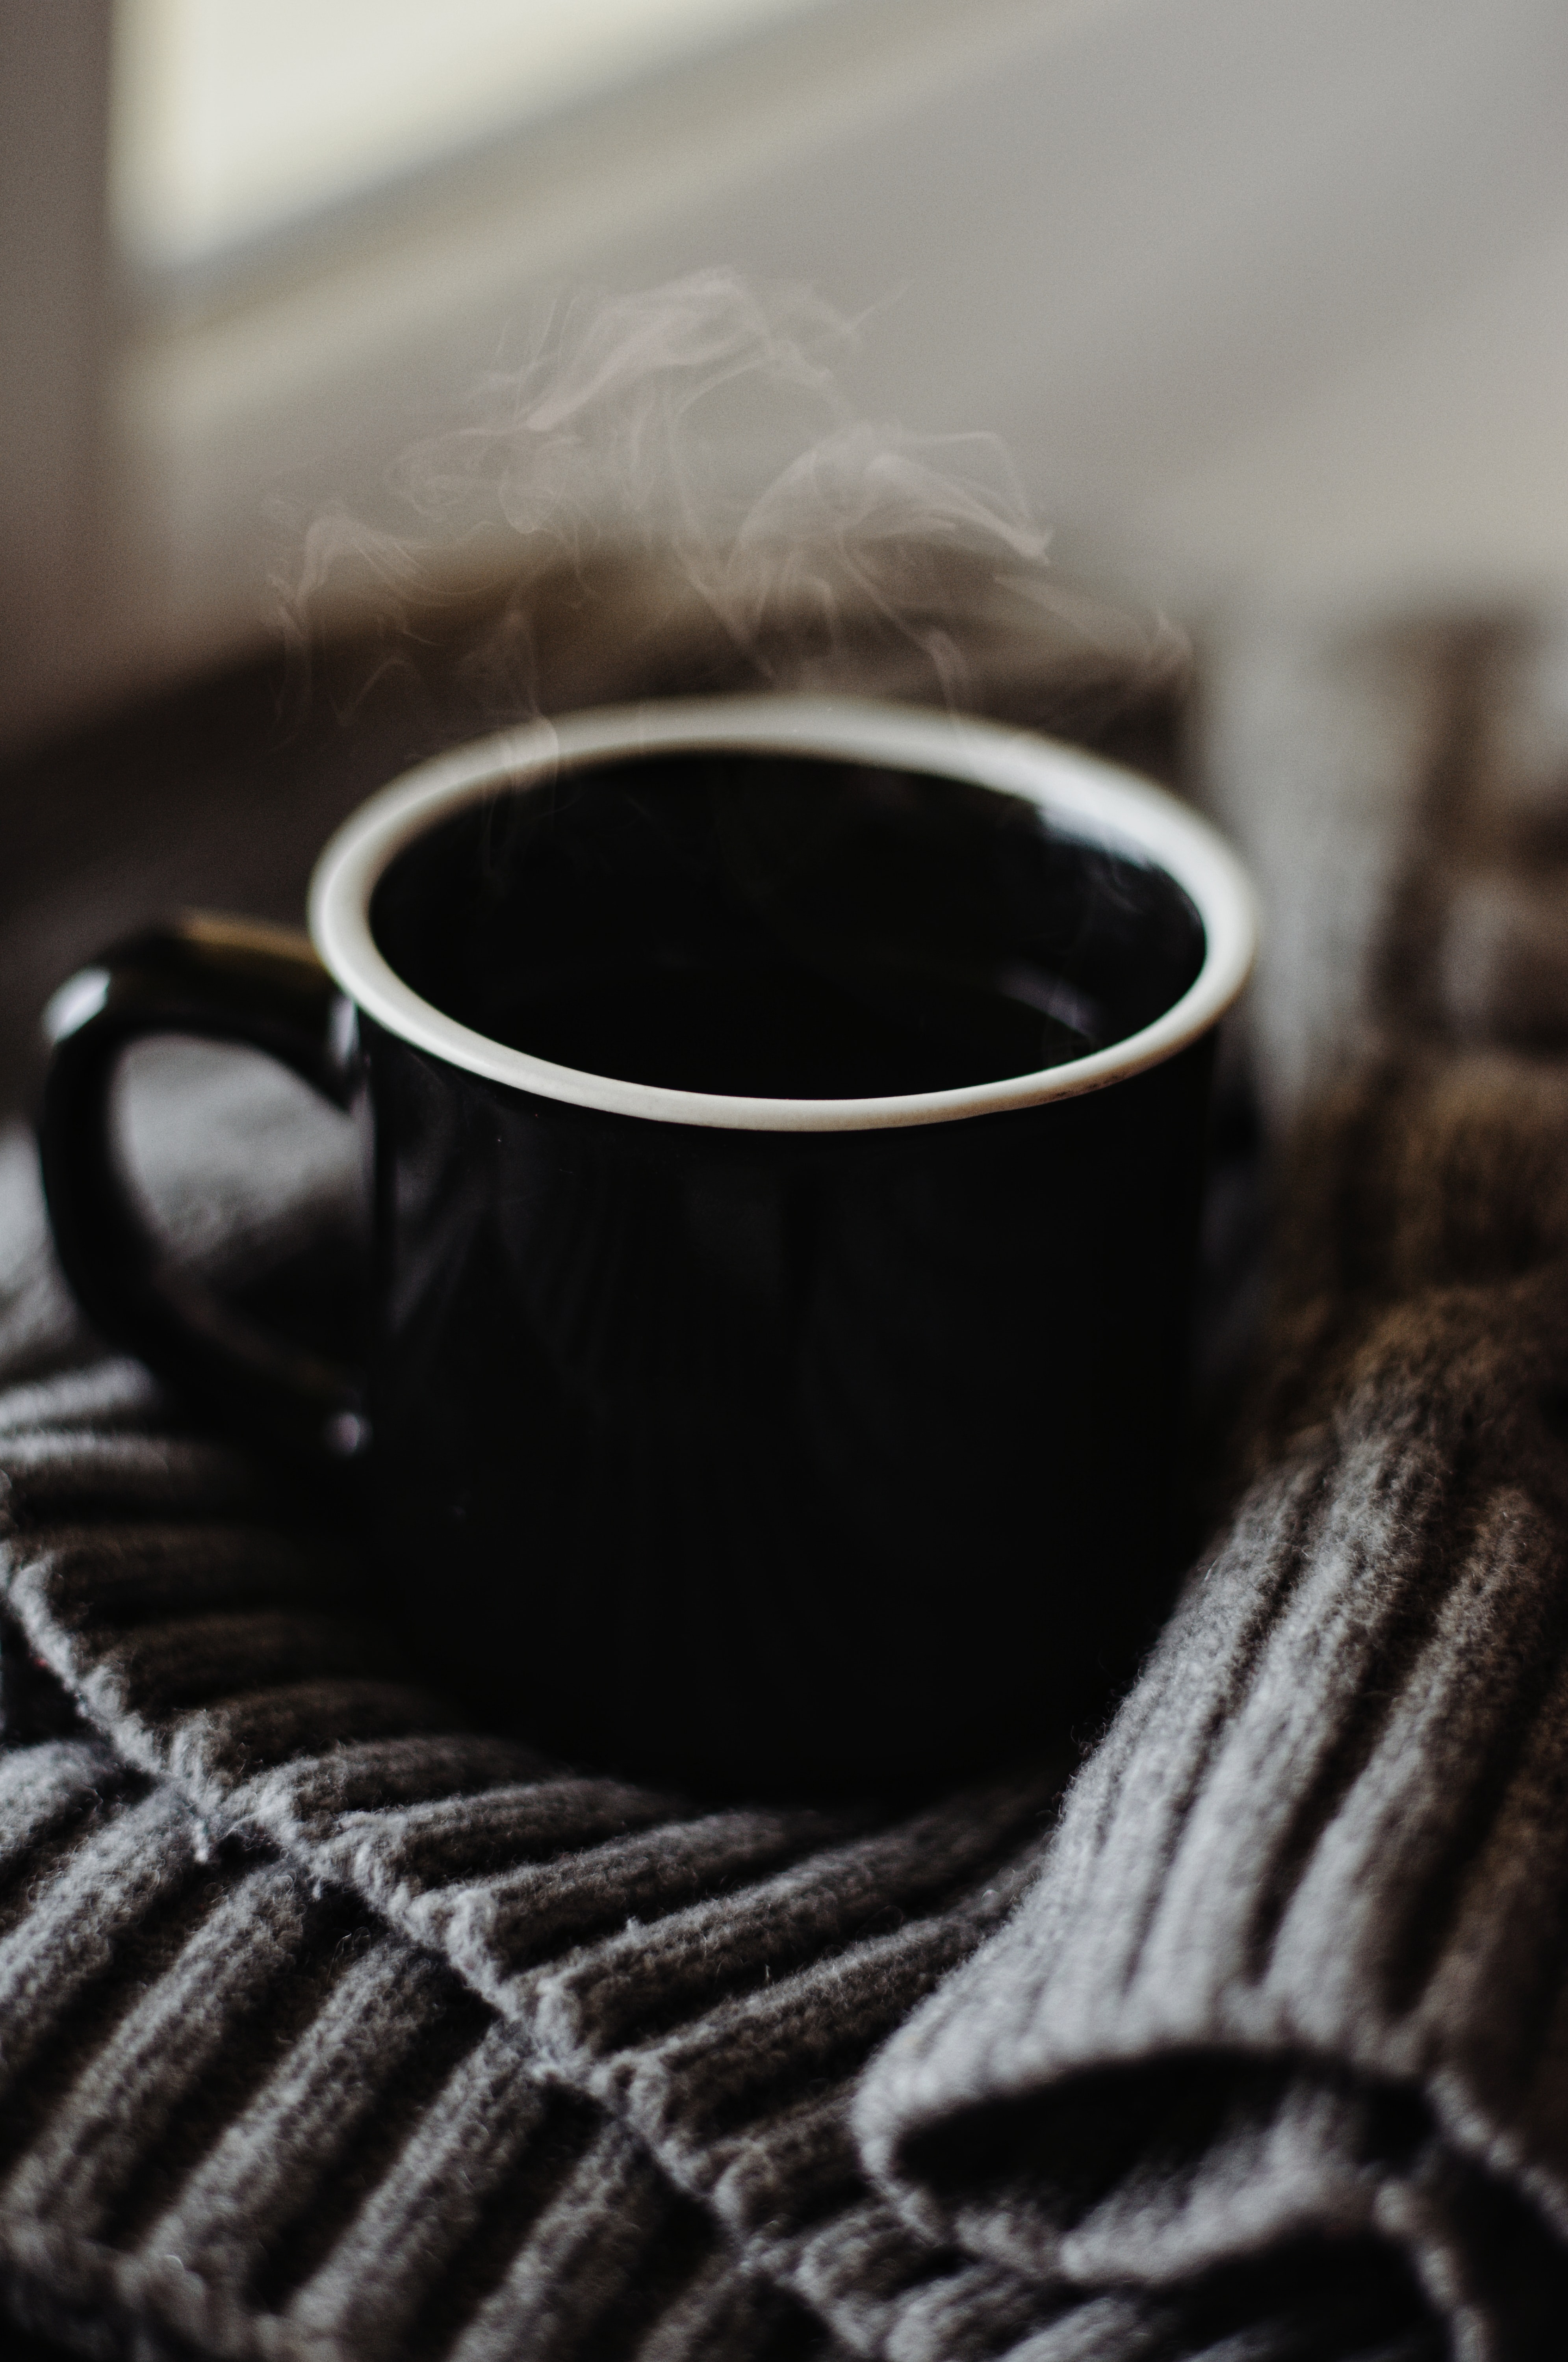 hot, steam, coffee, miscellanea, miscellaneous, cup